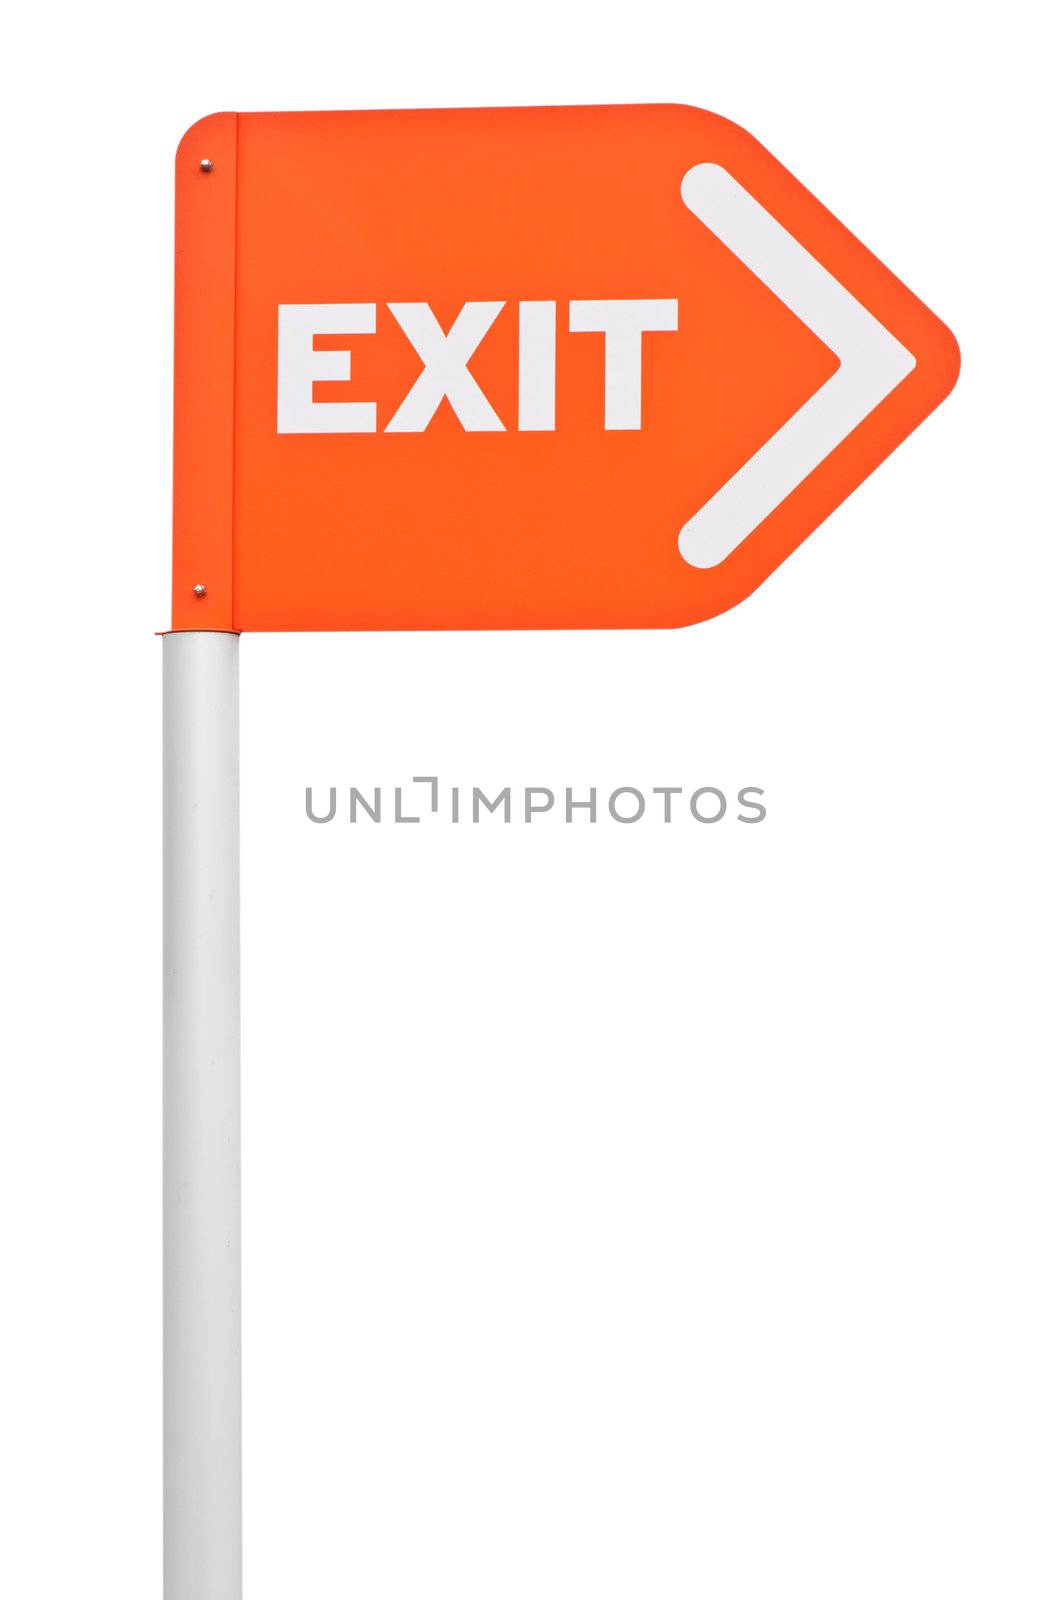 Exit sign by luissantos84